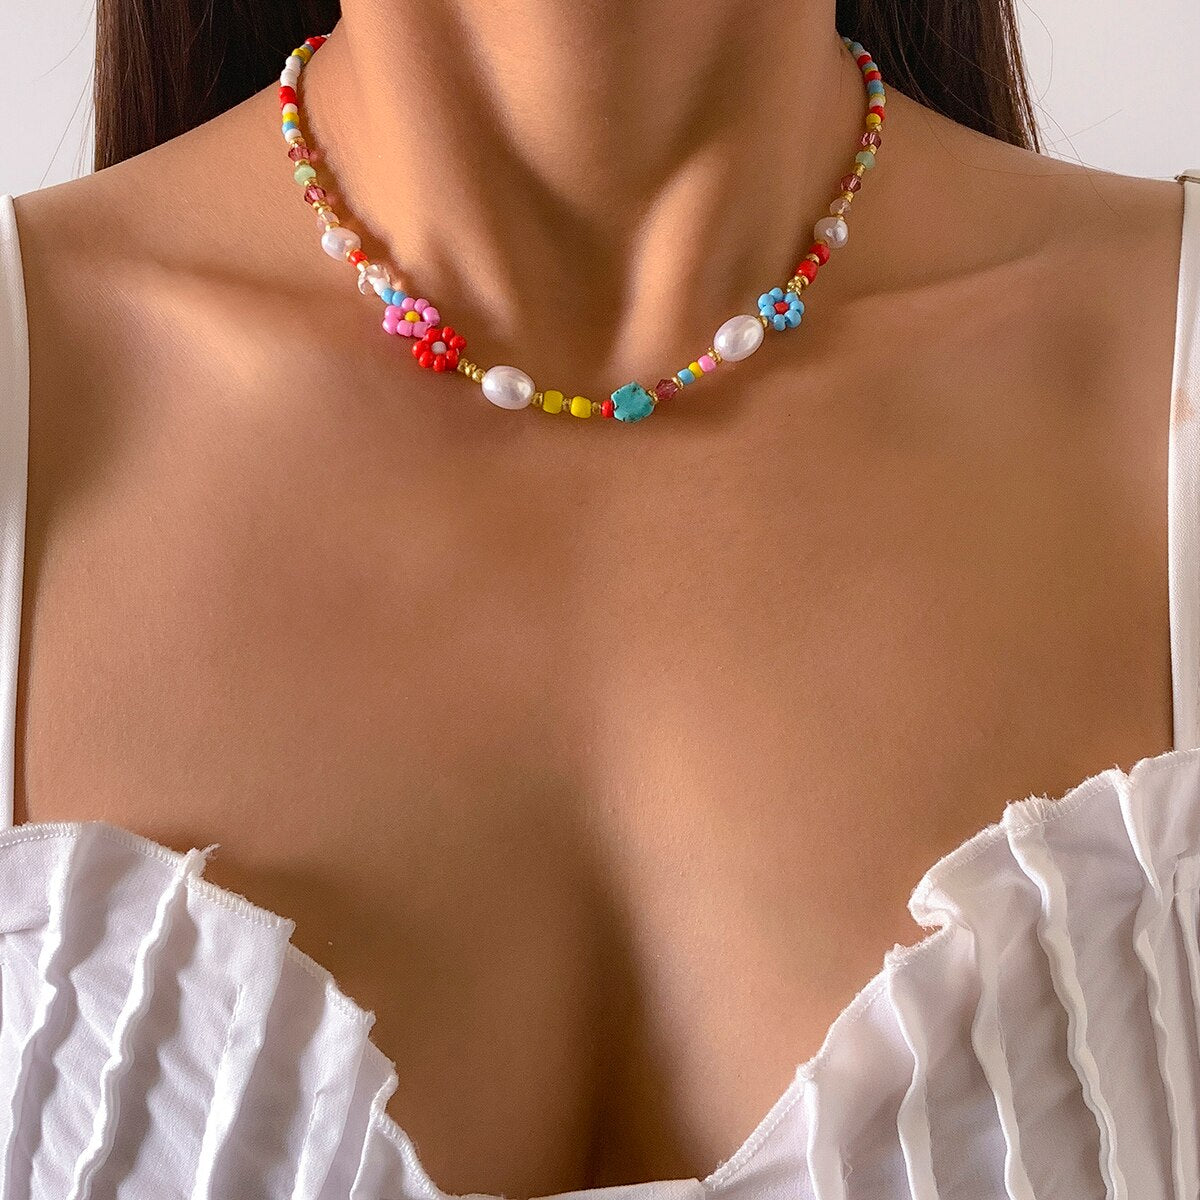 Imitation Boho Colorful Handmade Pearl Necklace for Men